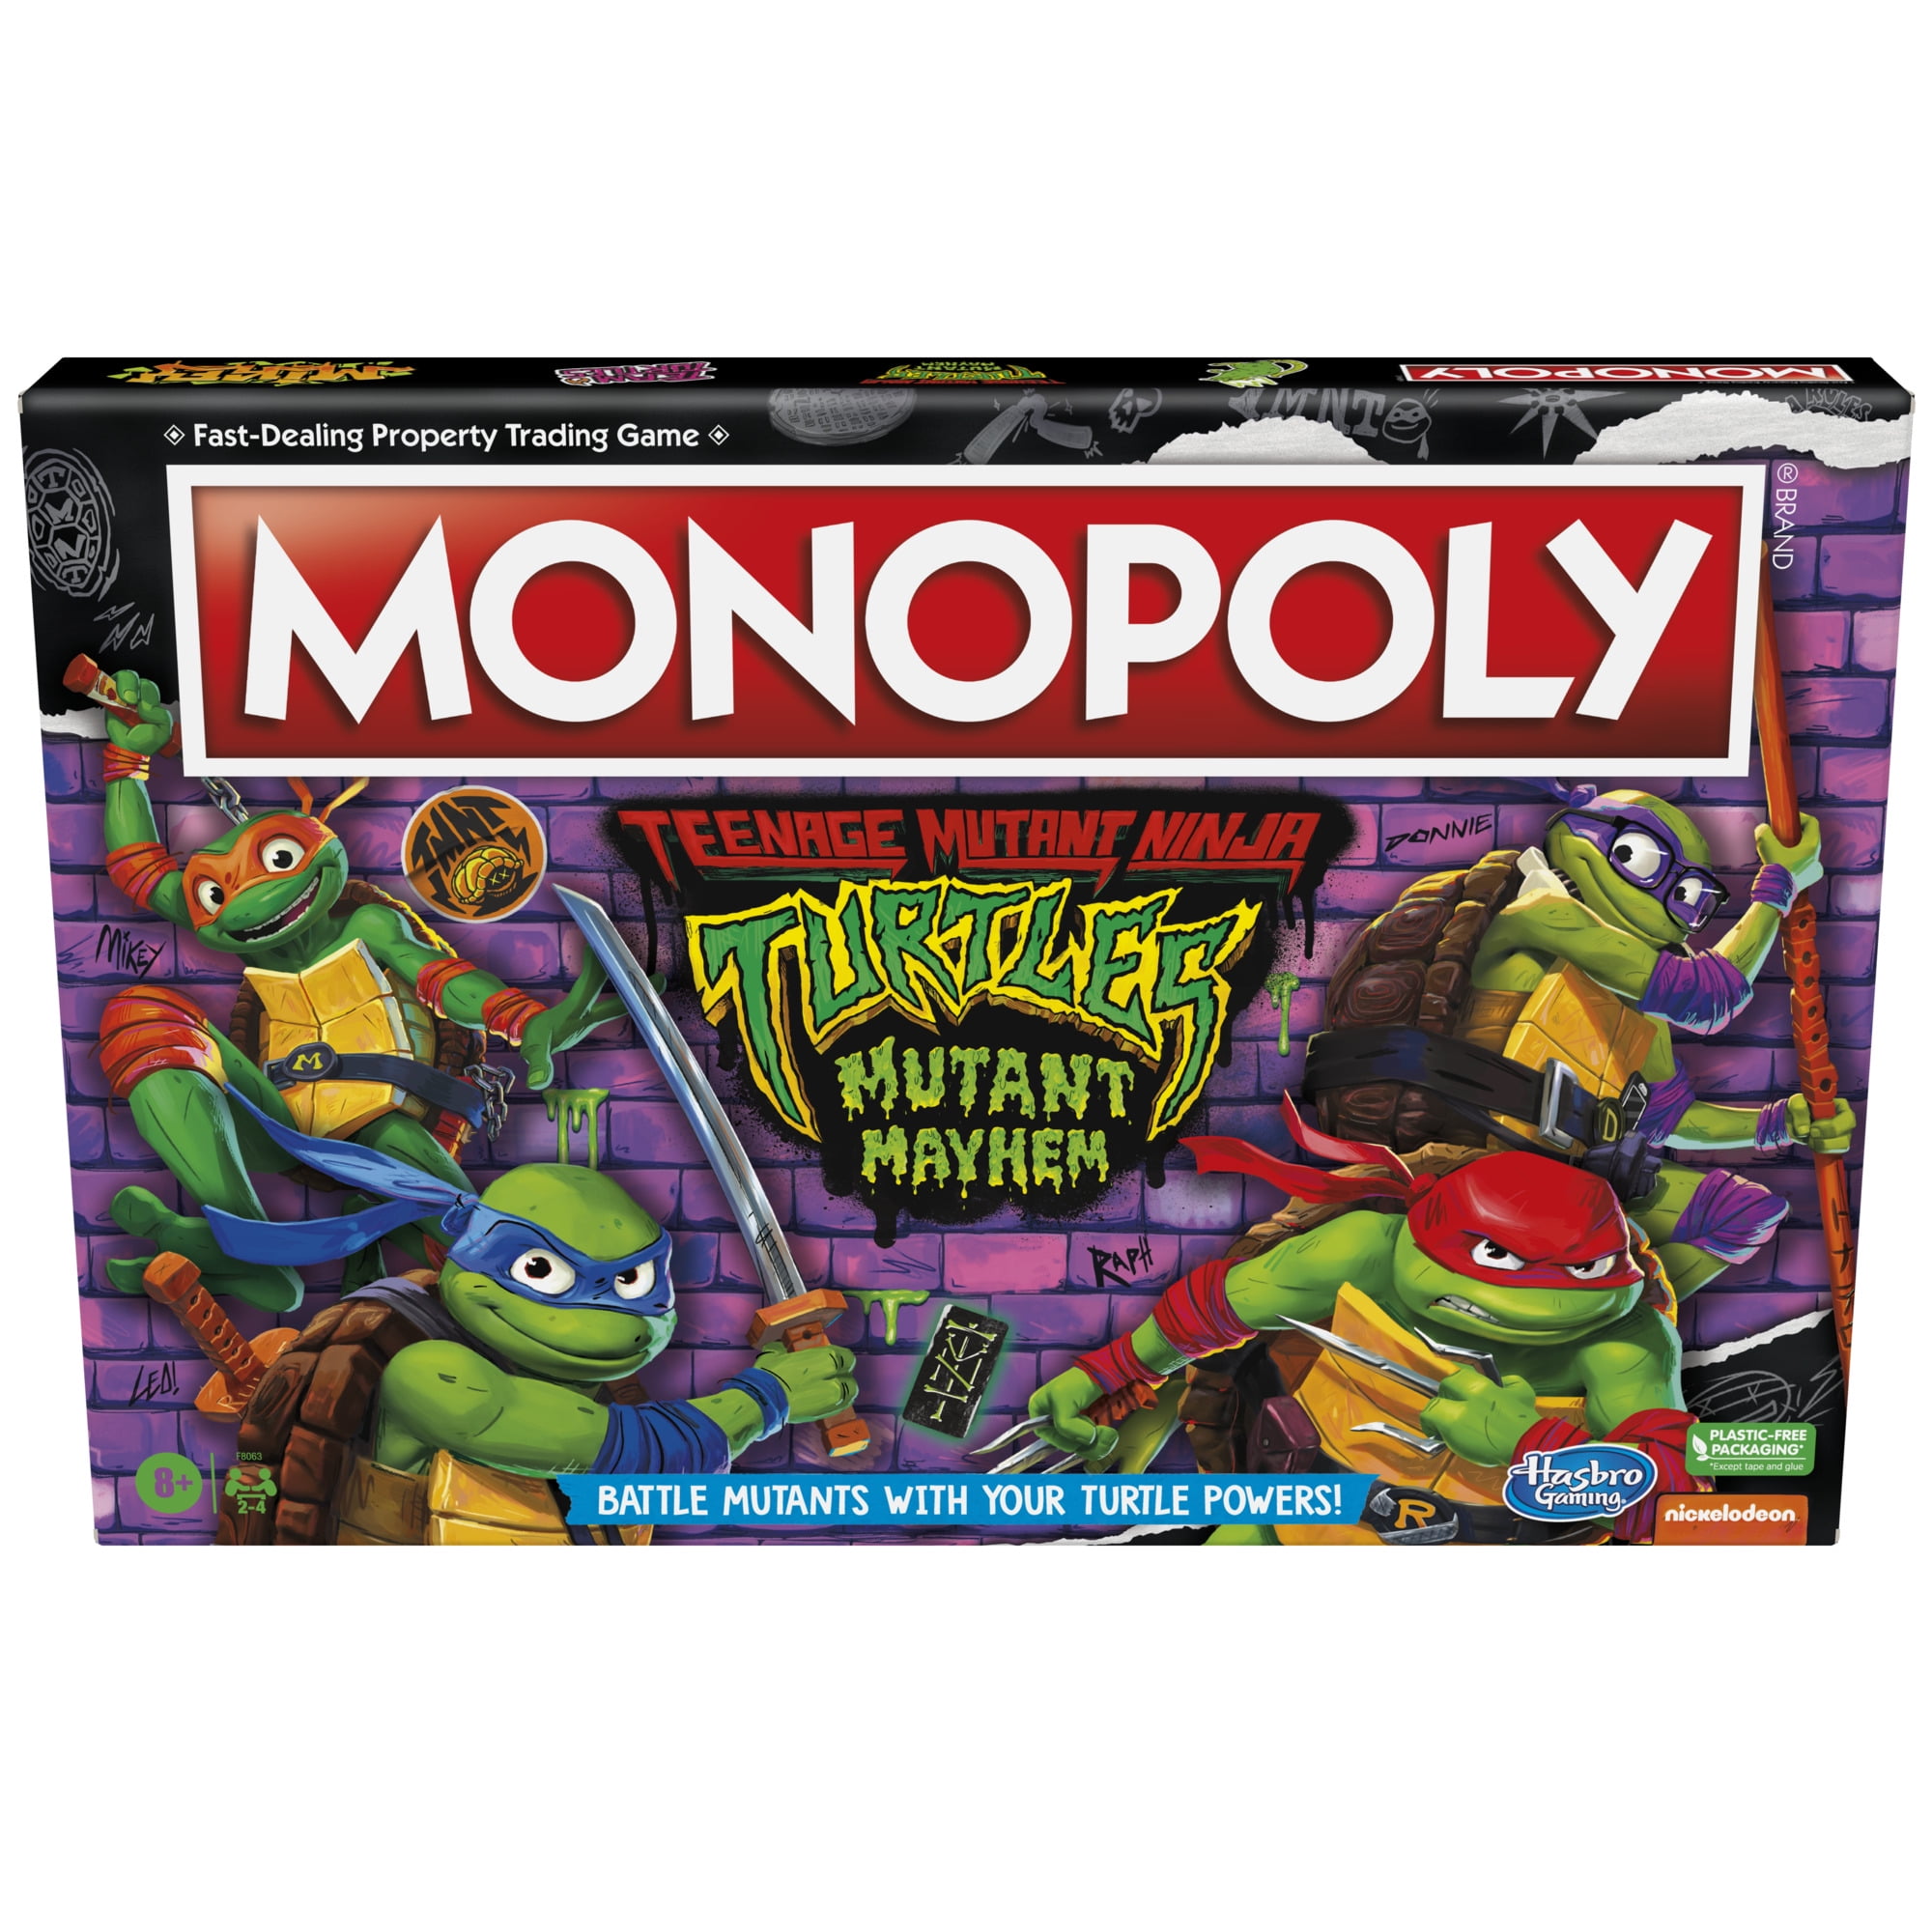 Monopoly Teenage Mutant Ninja Turtles: Mutant Mayhem Edition Board Game for Kids, Christmas Gifts under $25, 8+